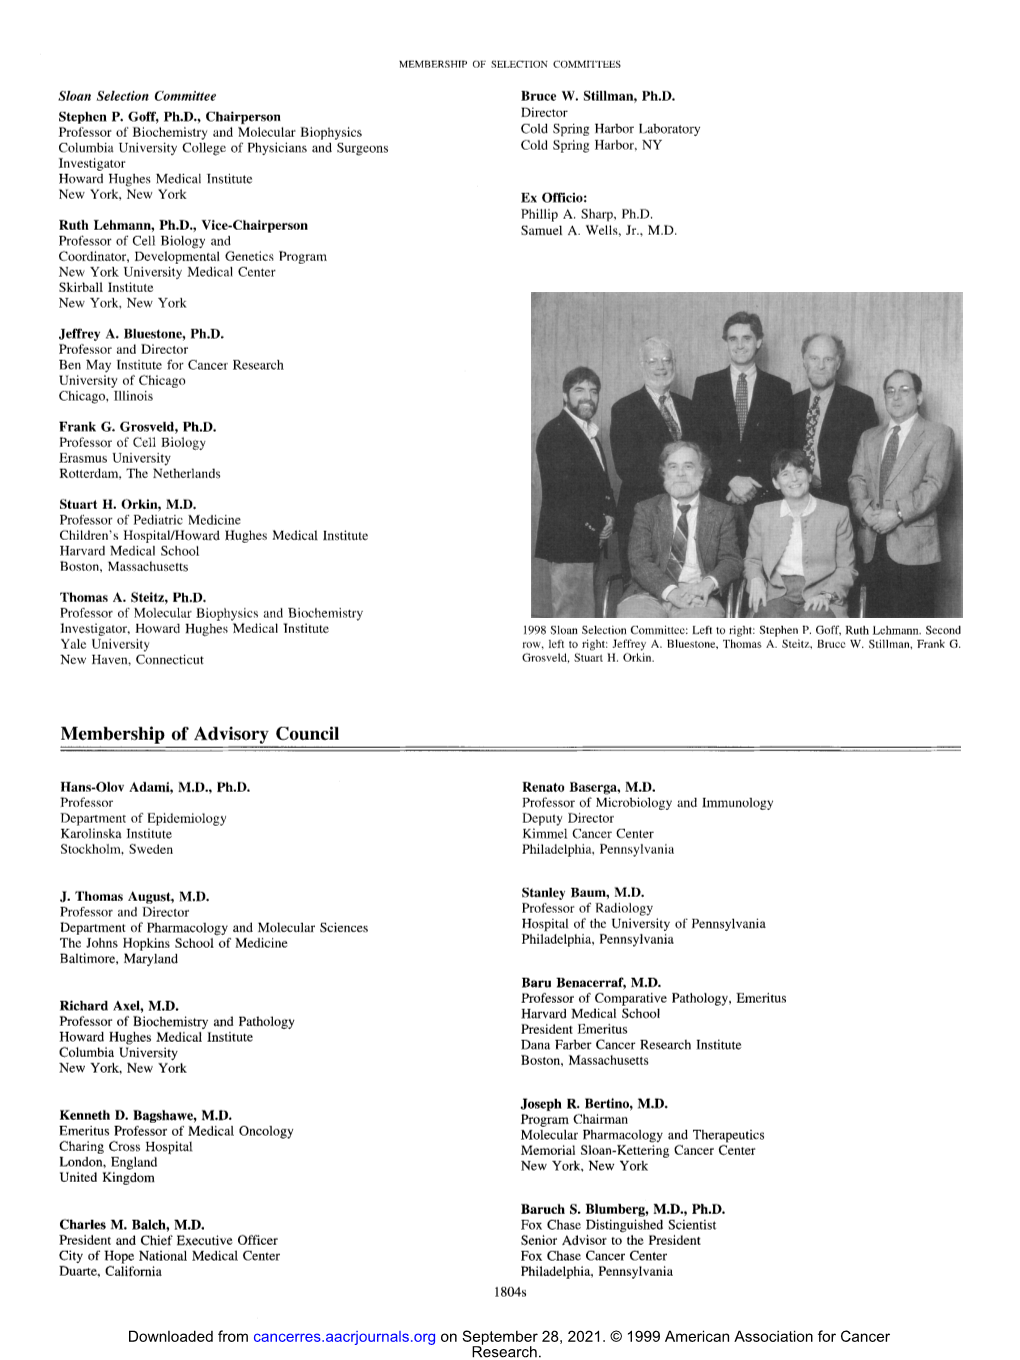 Membership of Advisory Council